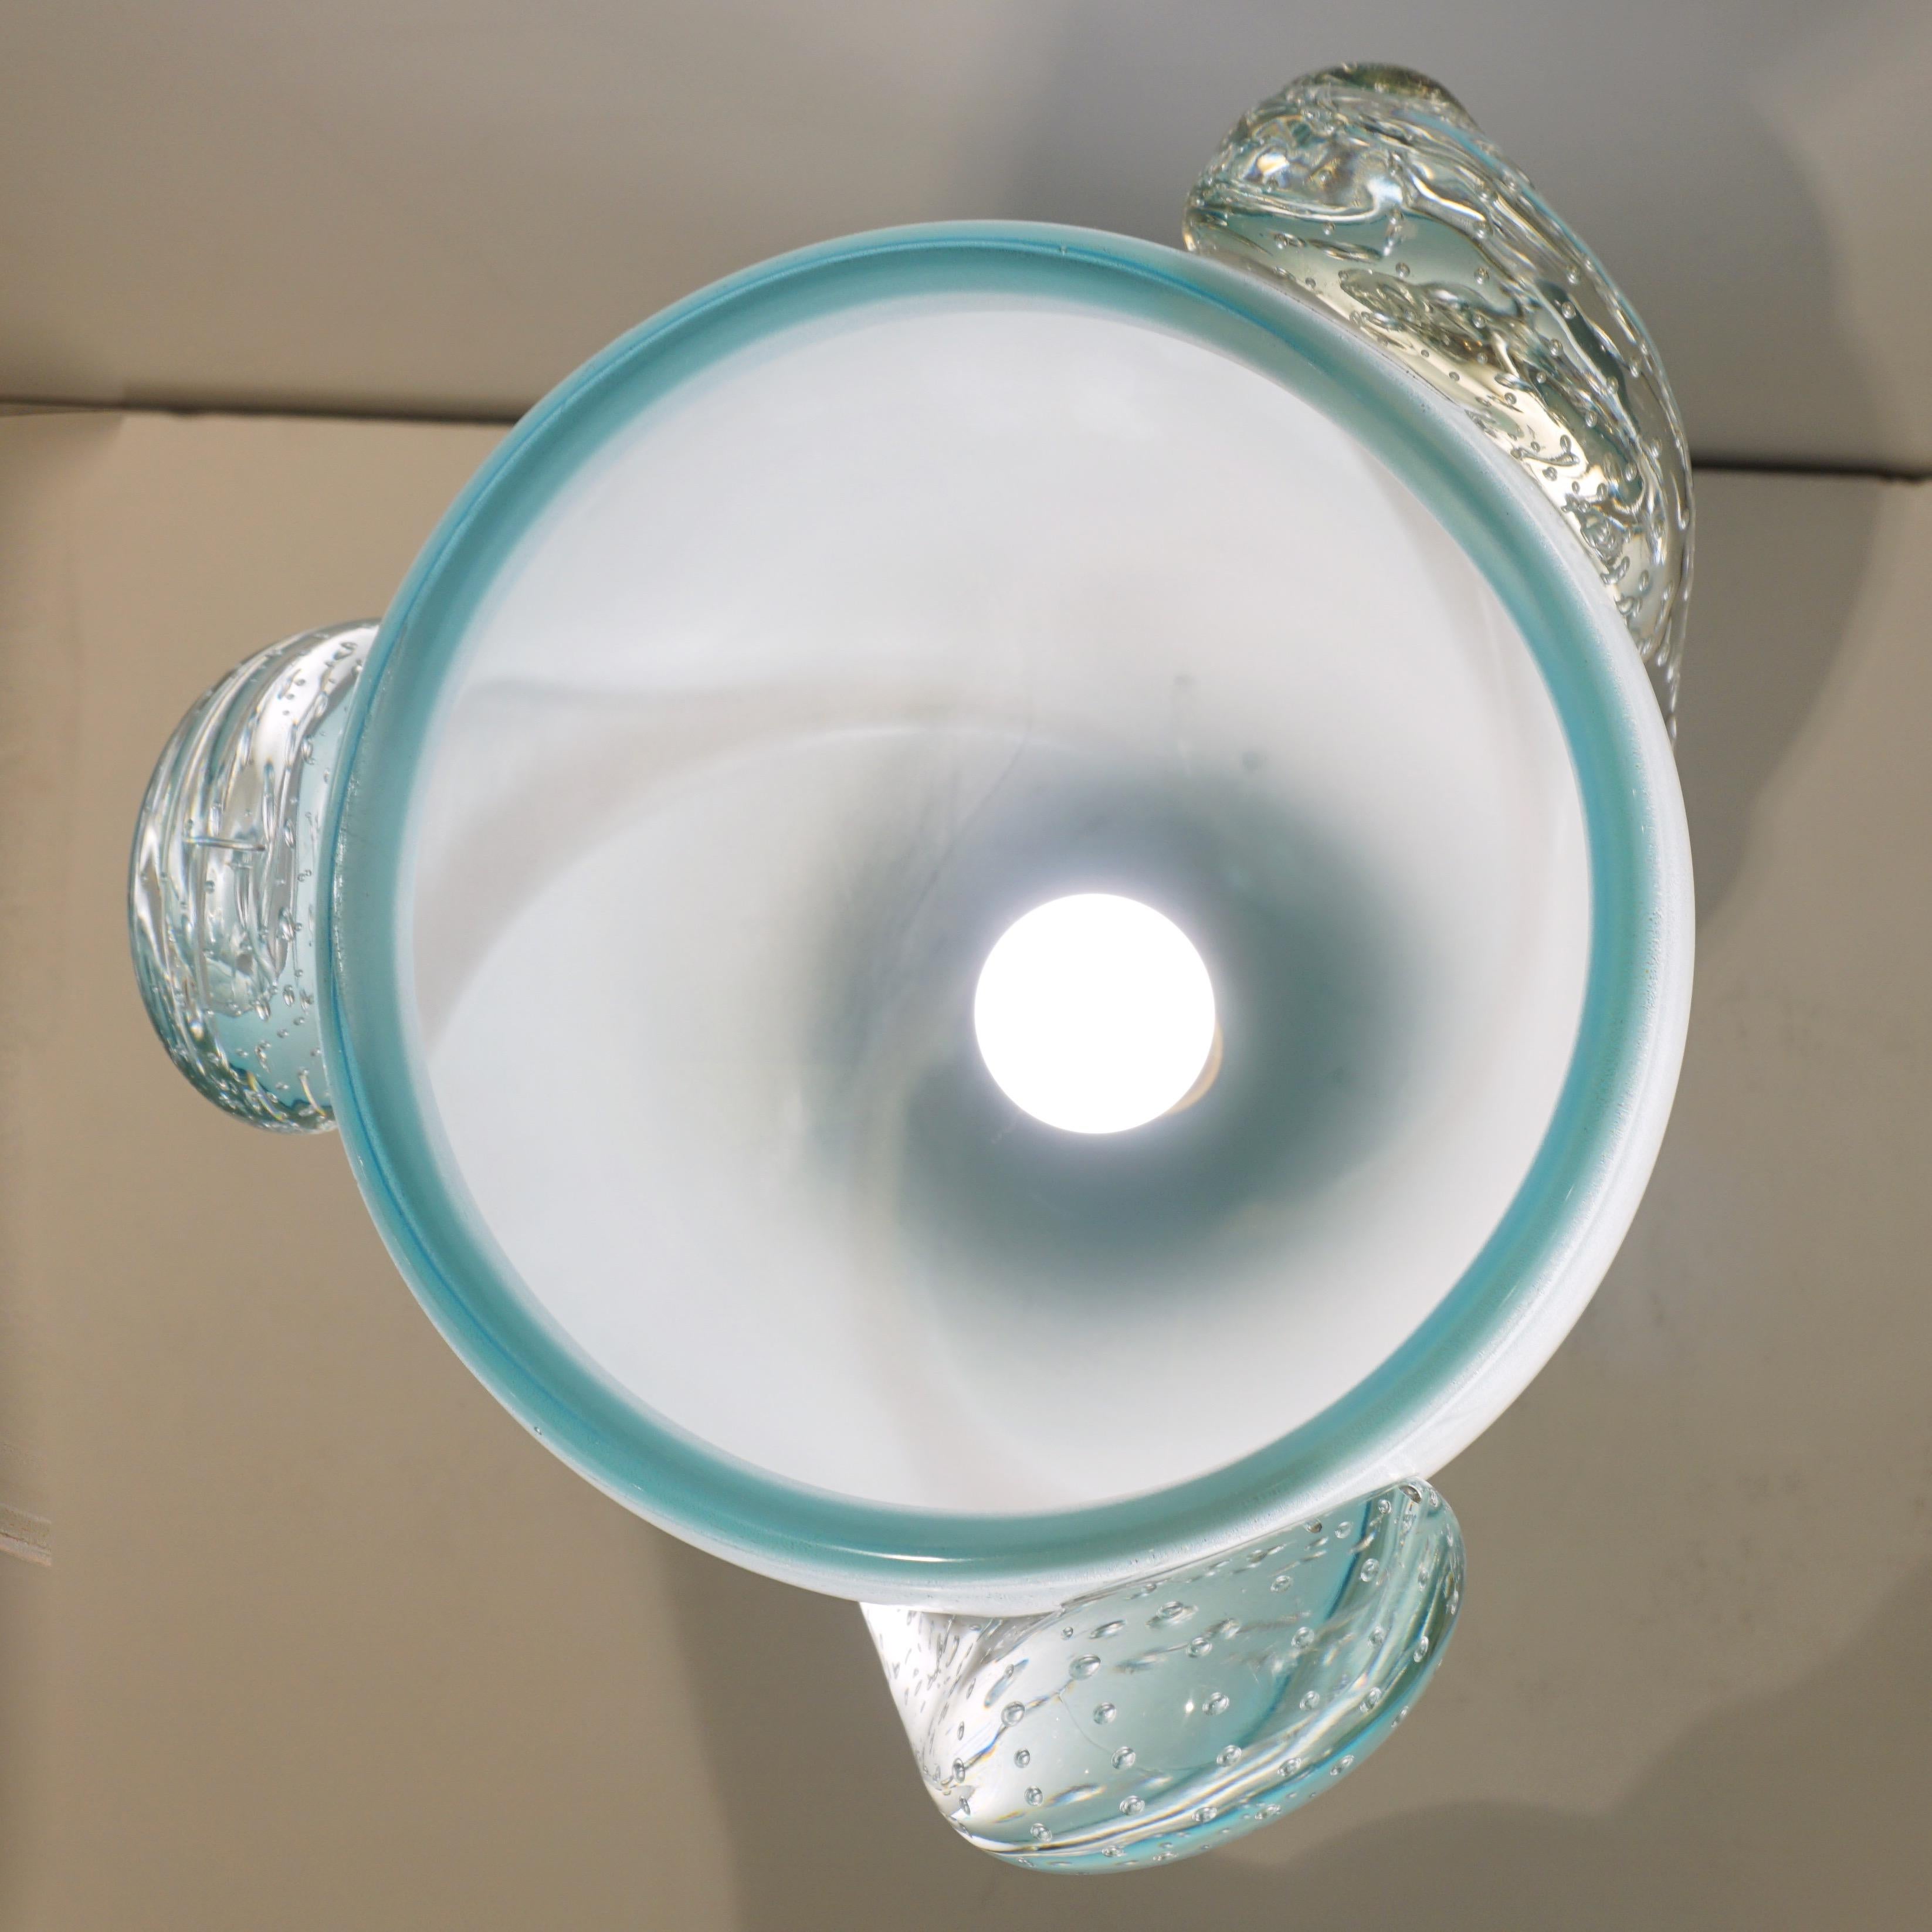 Barovier Toso Contemporary Italian Modern Aqua Blue Murano Glass Organic Lamp For Sale 7